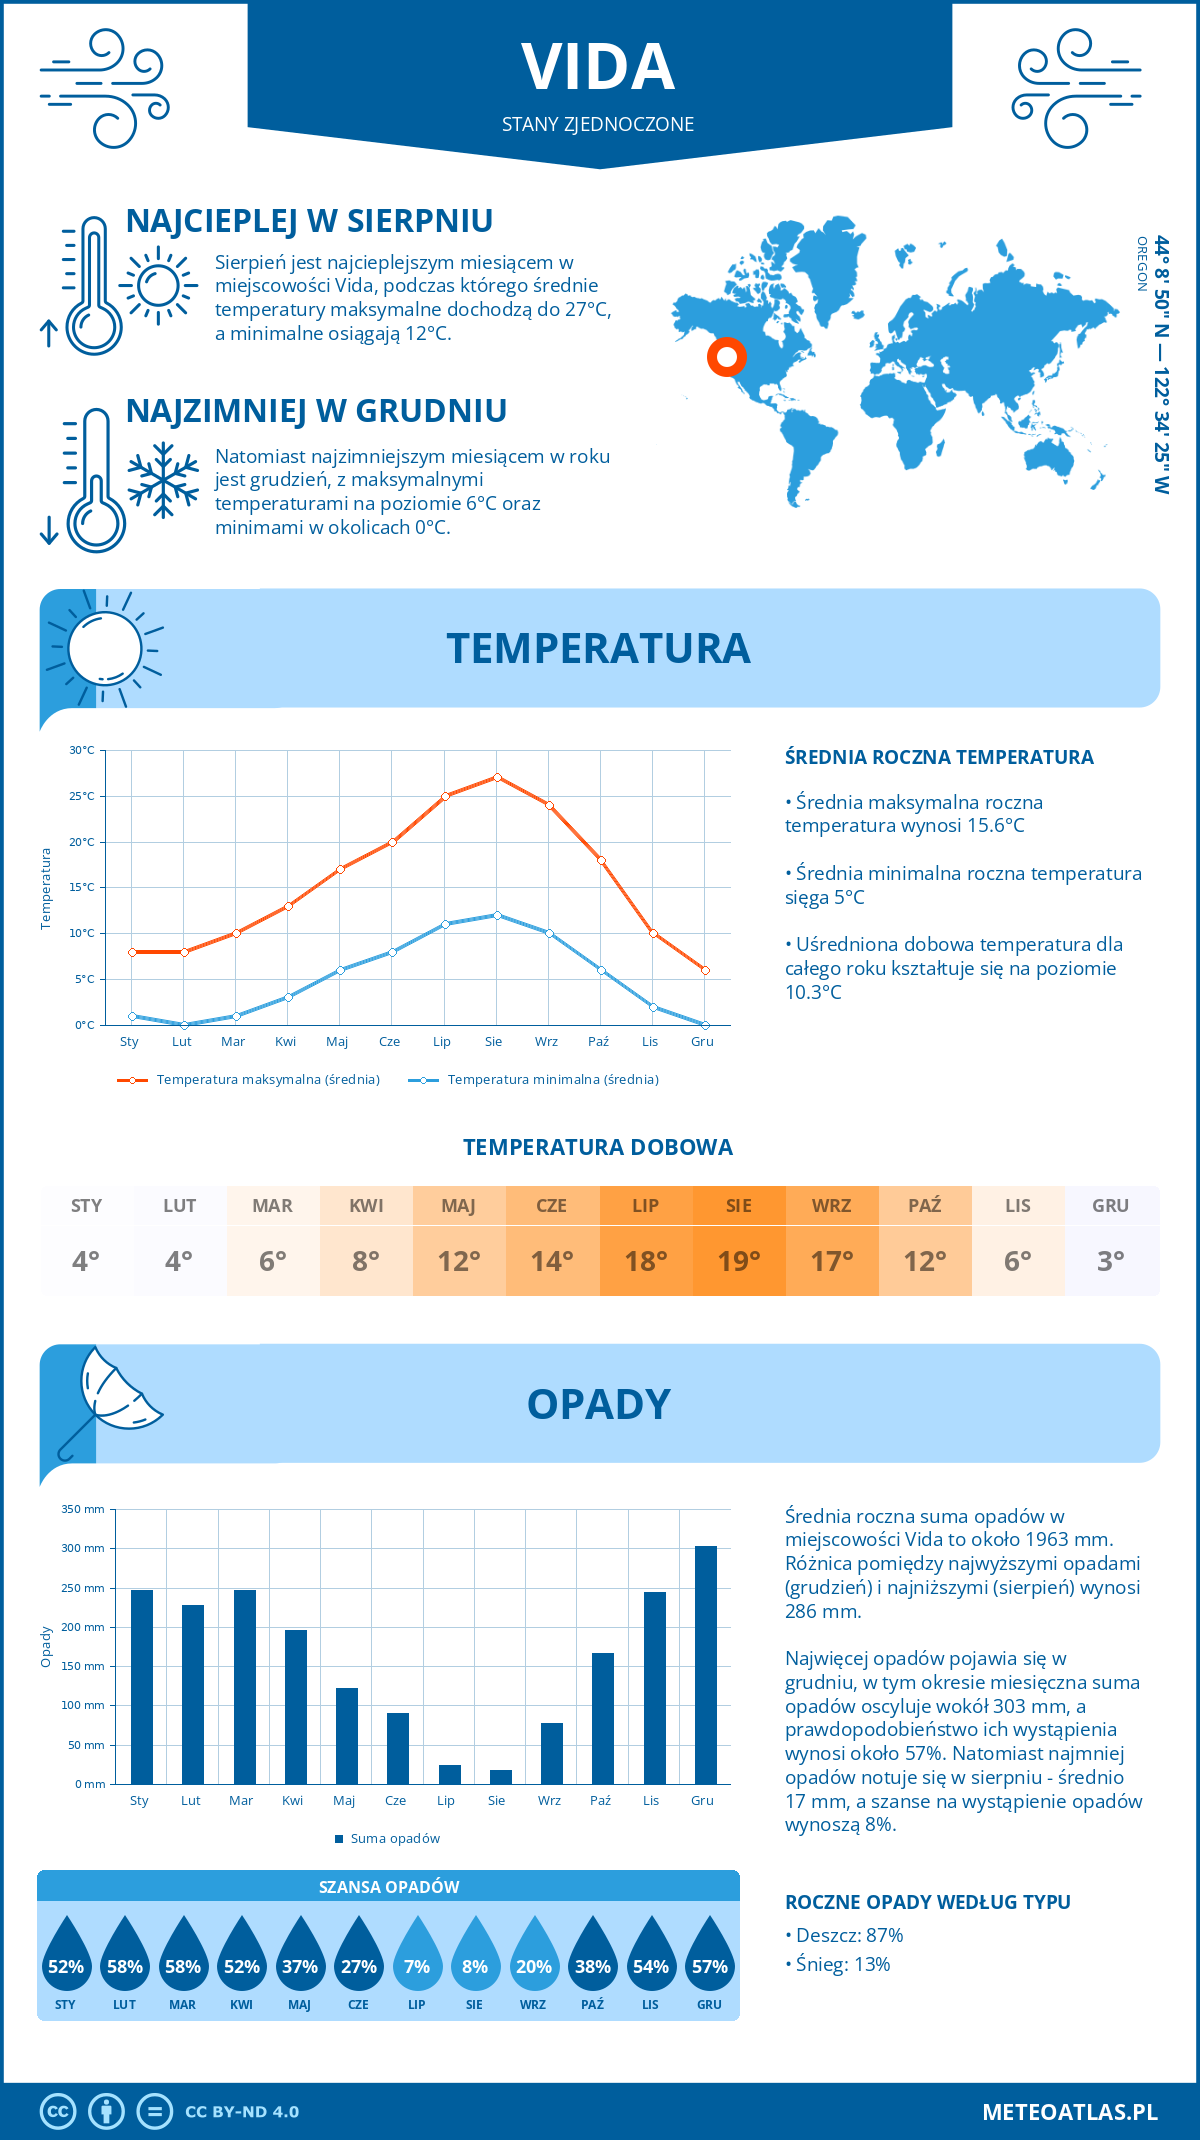 Pogoda Vida (Stany Zjednoczone). Temperatura oraz opady.